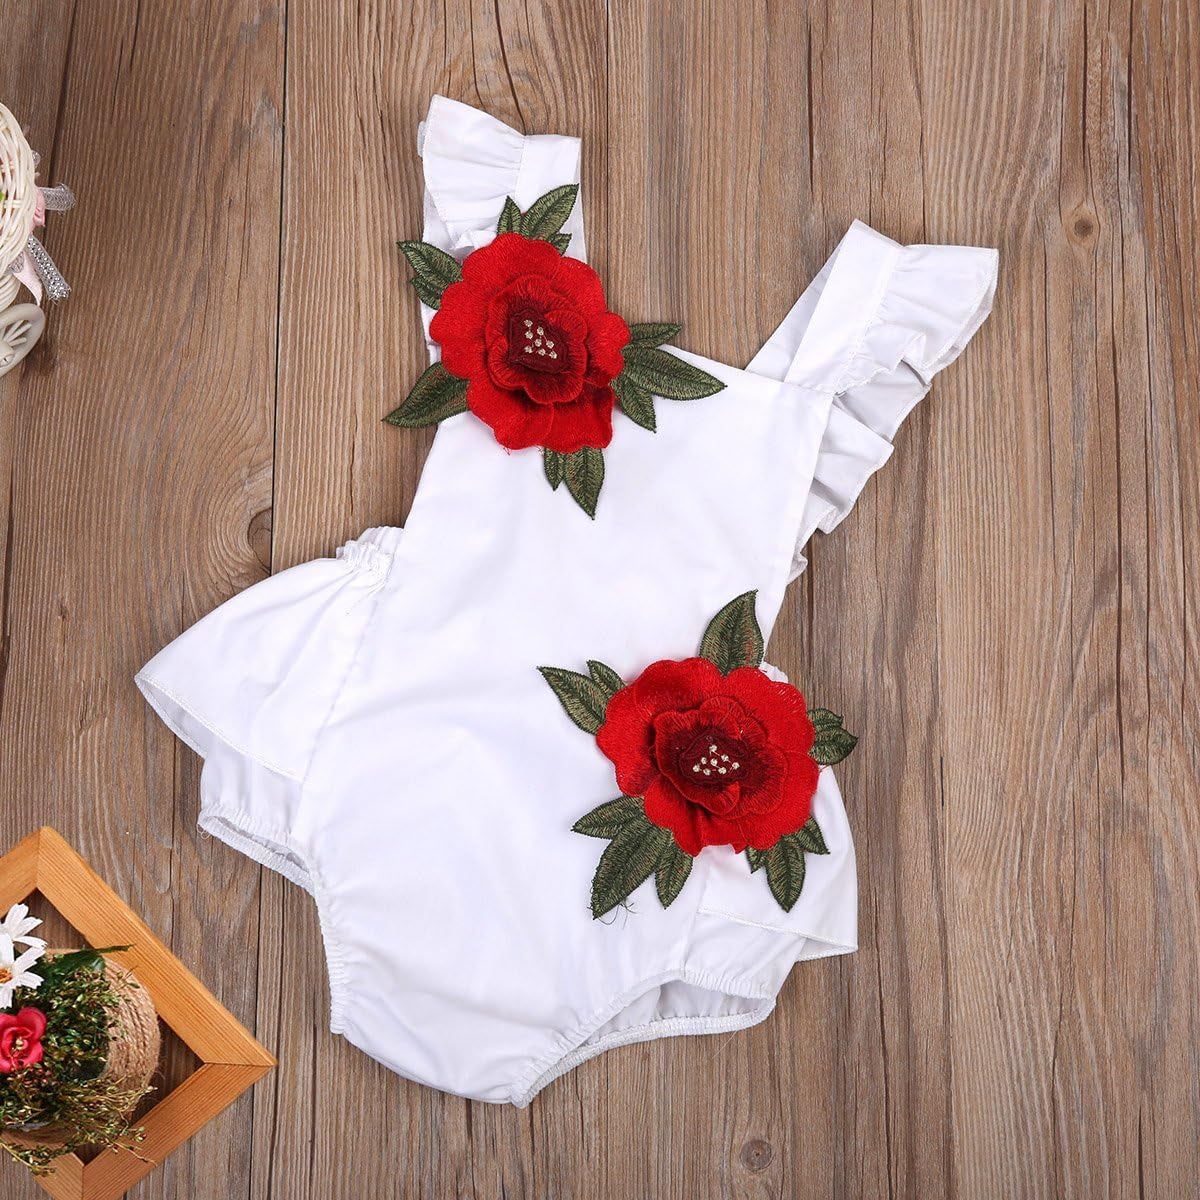 Baby Girl's Jumpsuit Newborn Infant Kids Floral Summer Romper Bodysuit Sundress Outfits (6-12)